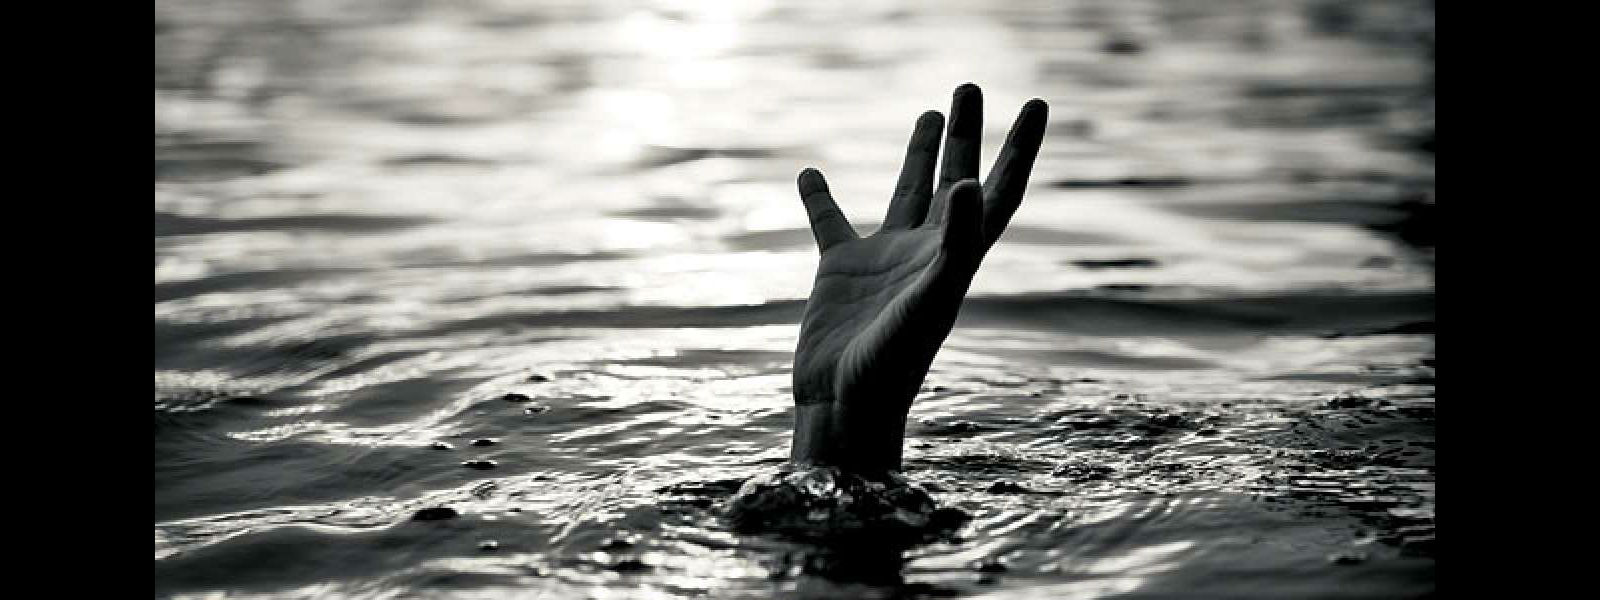 Father, and two sons drown in Mahiyanganaya